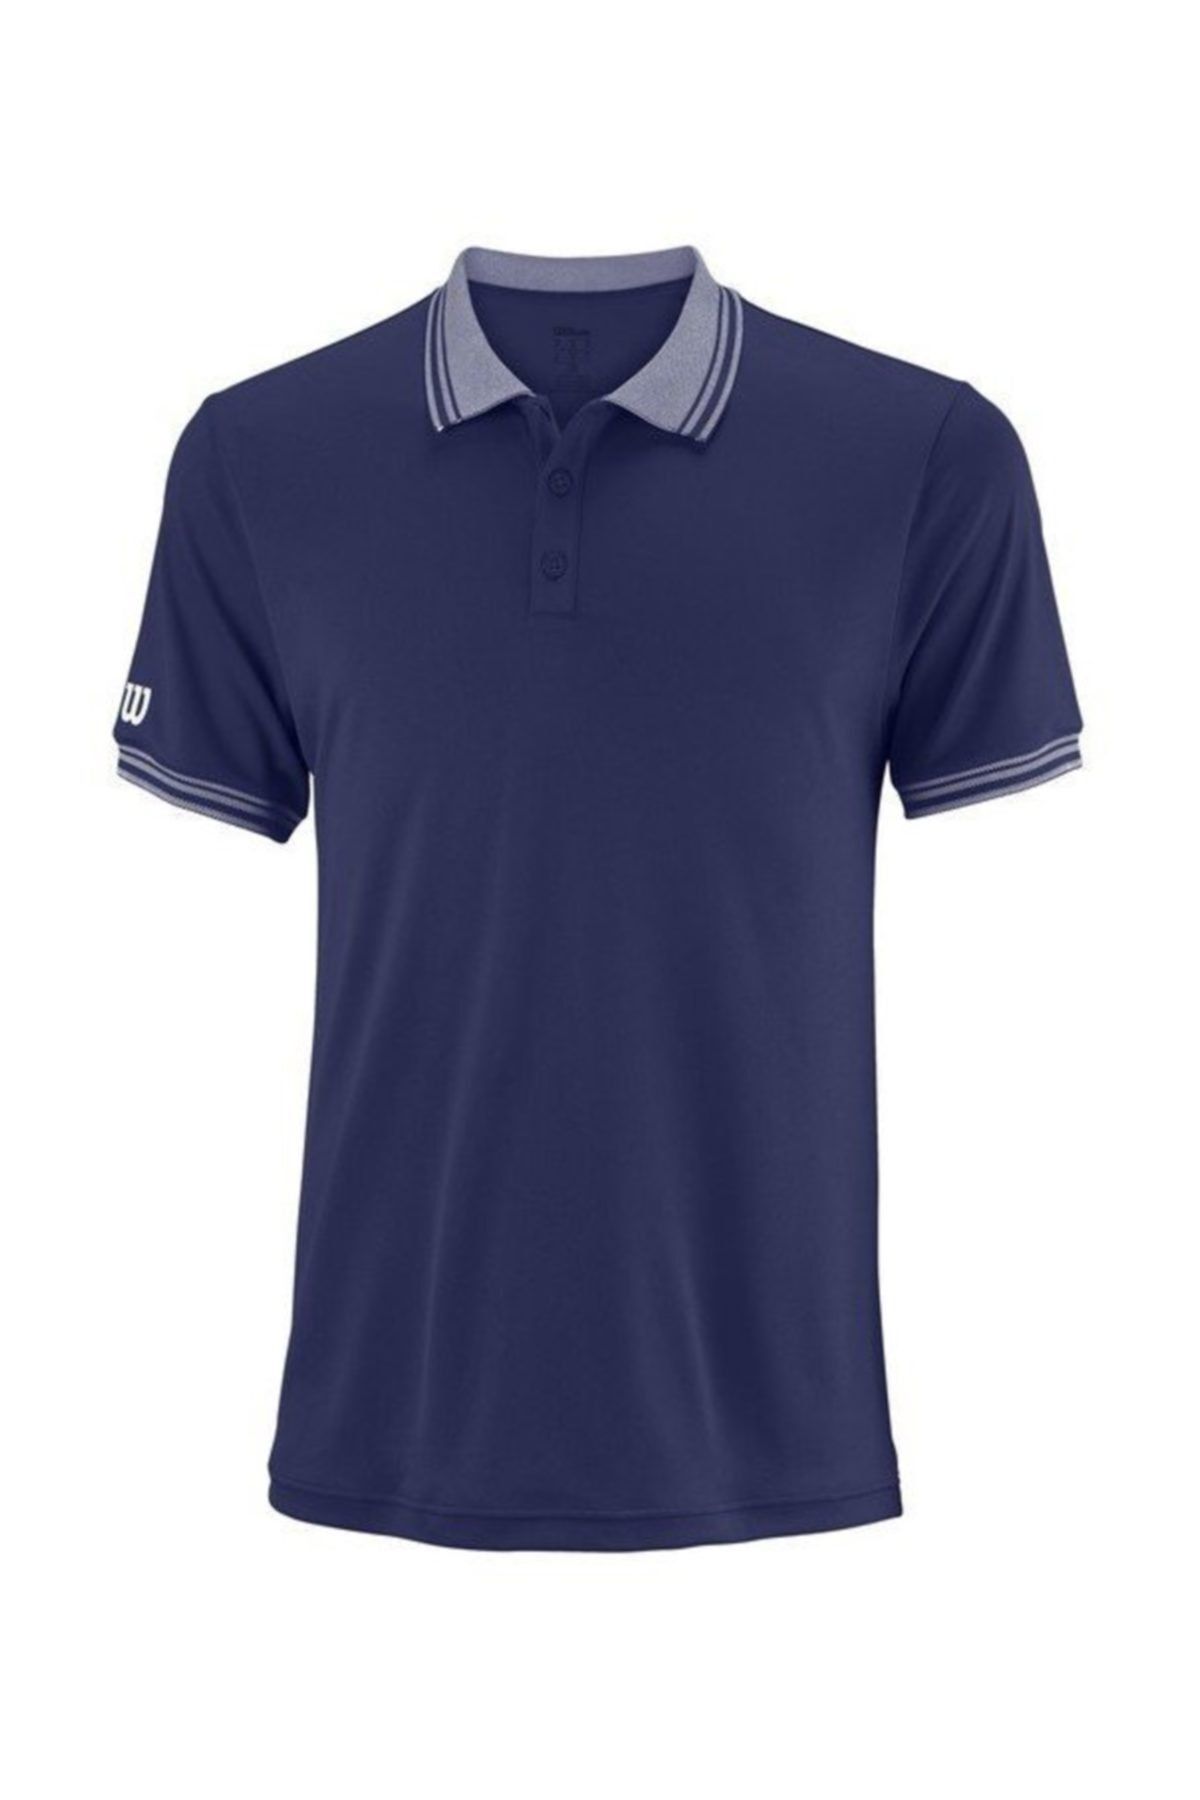 Wilson Polo Team Laci Erkek Tenis T-shirt Wra765404